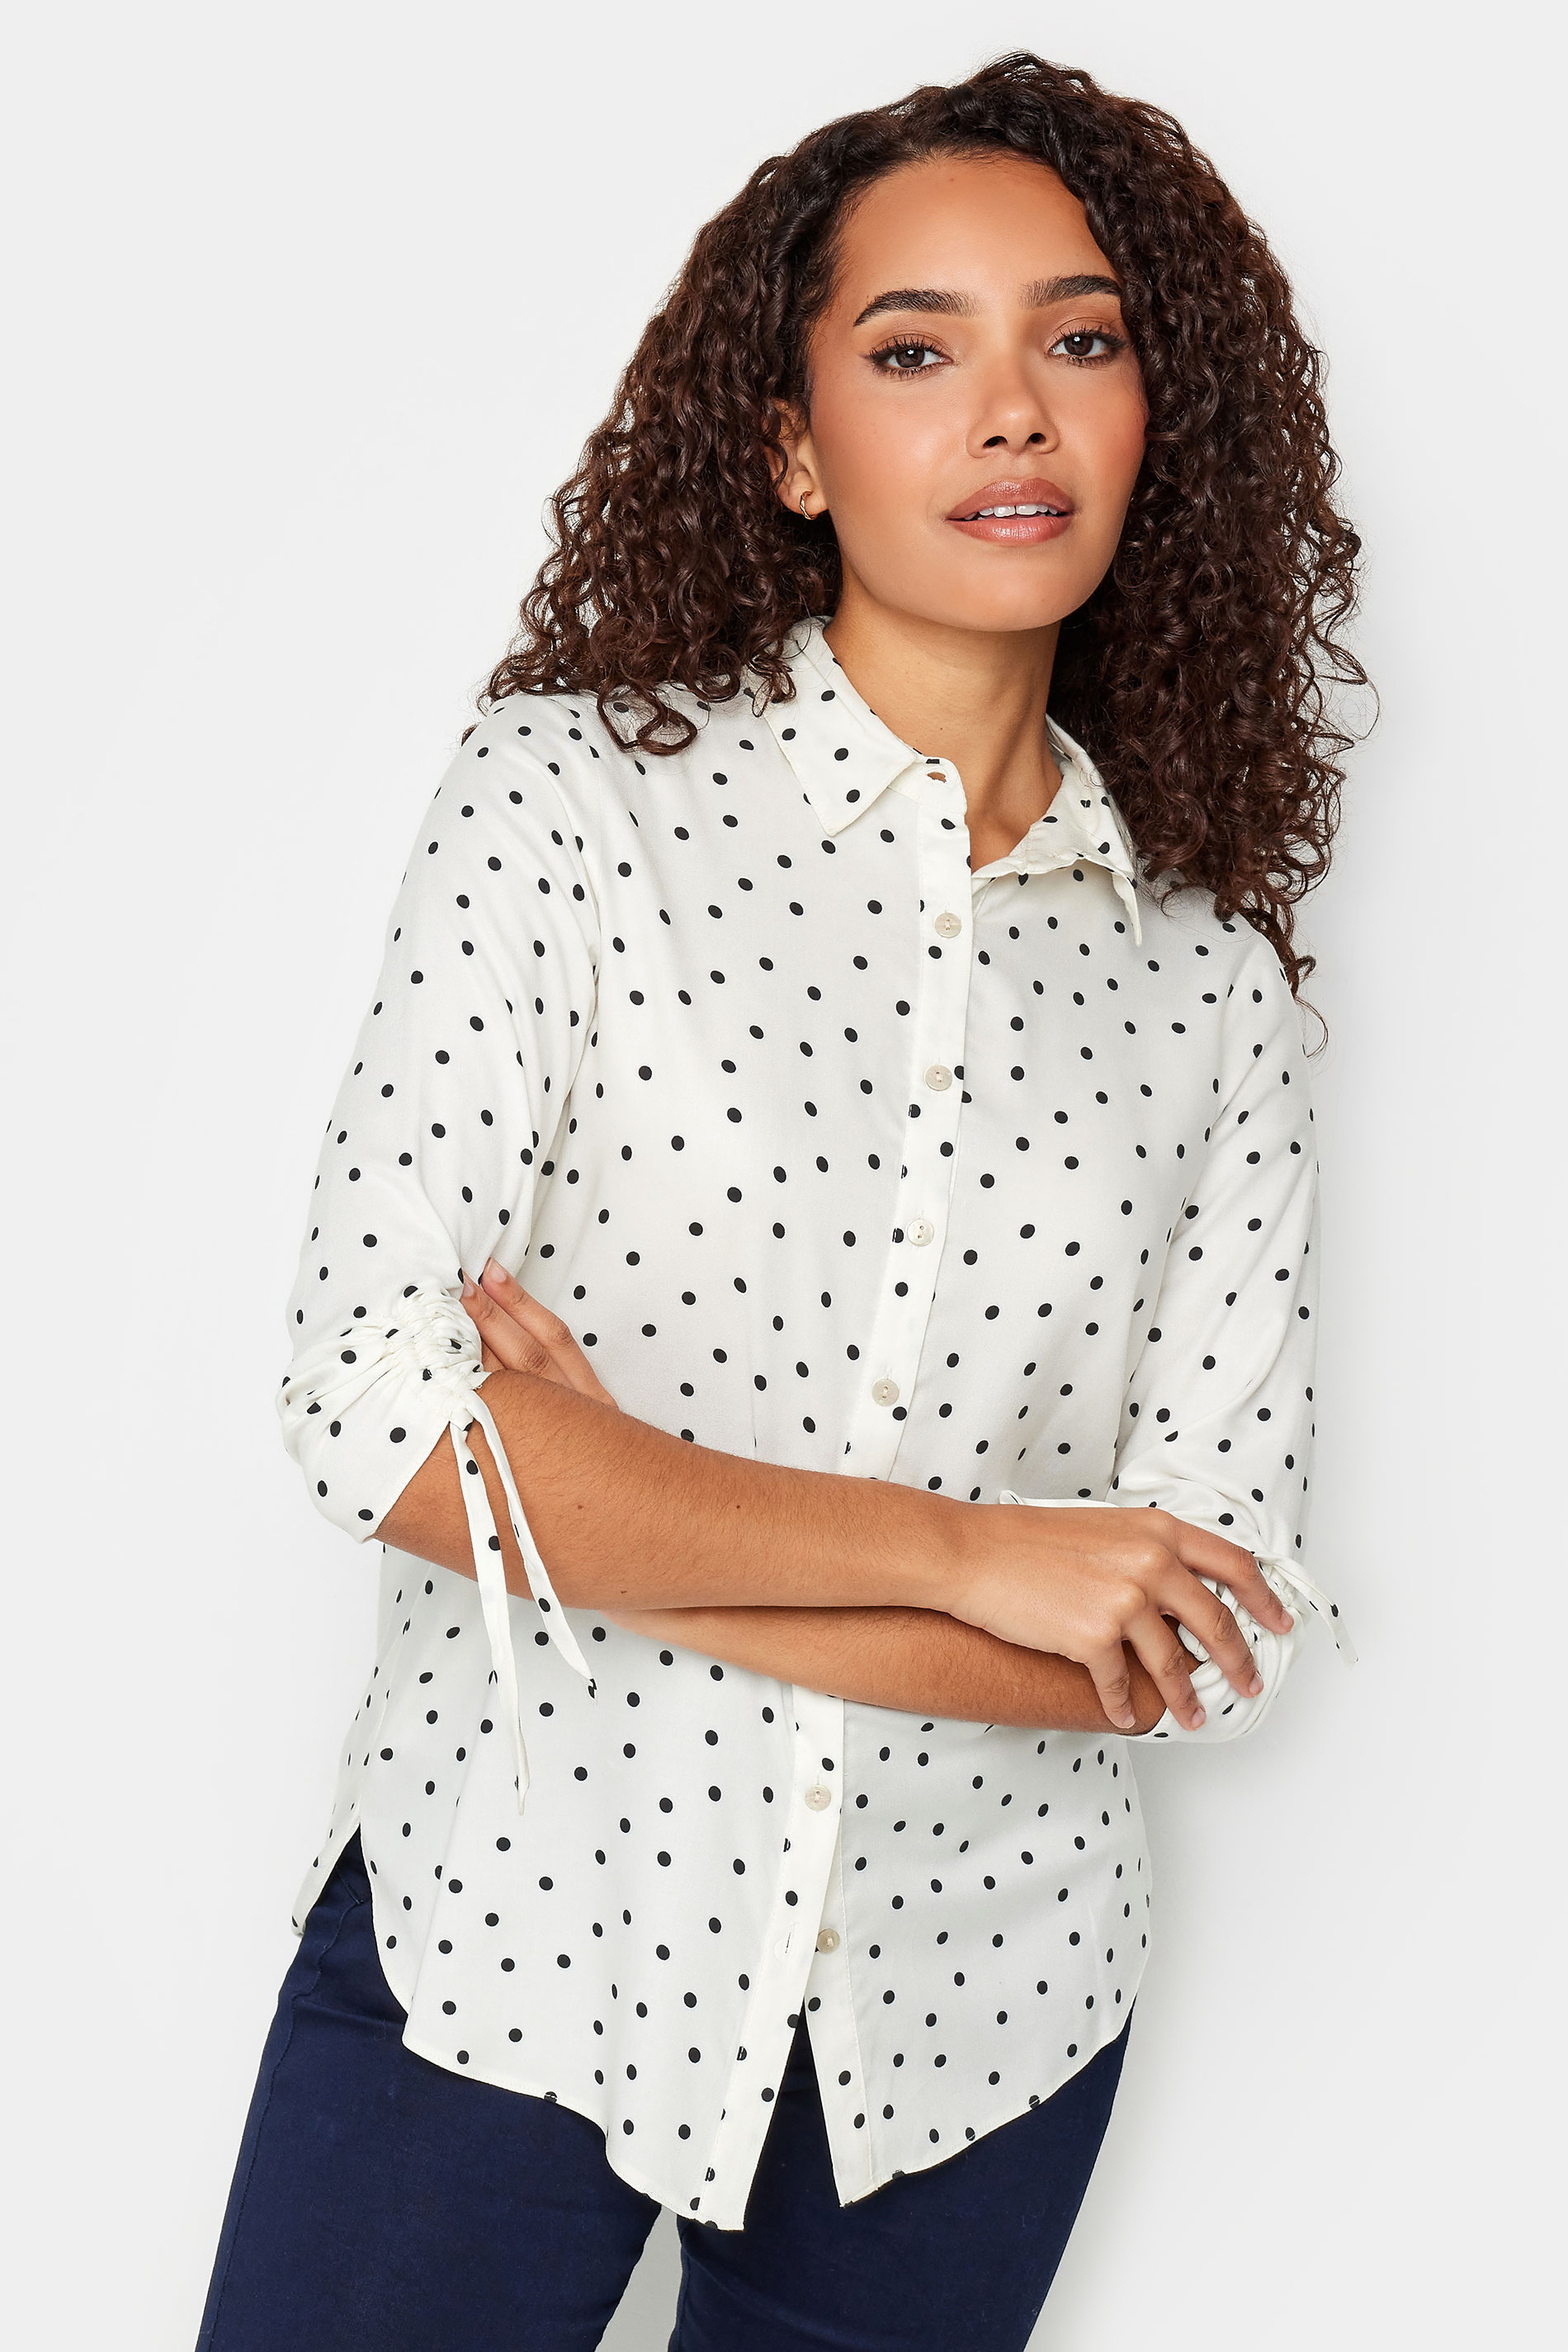 M&Co White Polka Dot Print Ruched Sleeve Shirt | M&Co 1